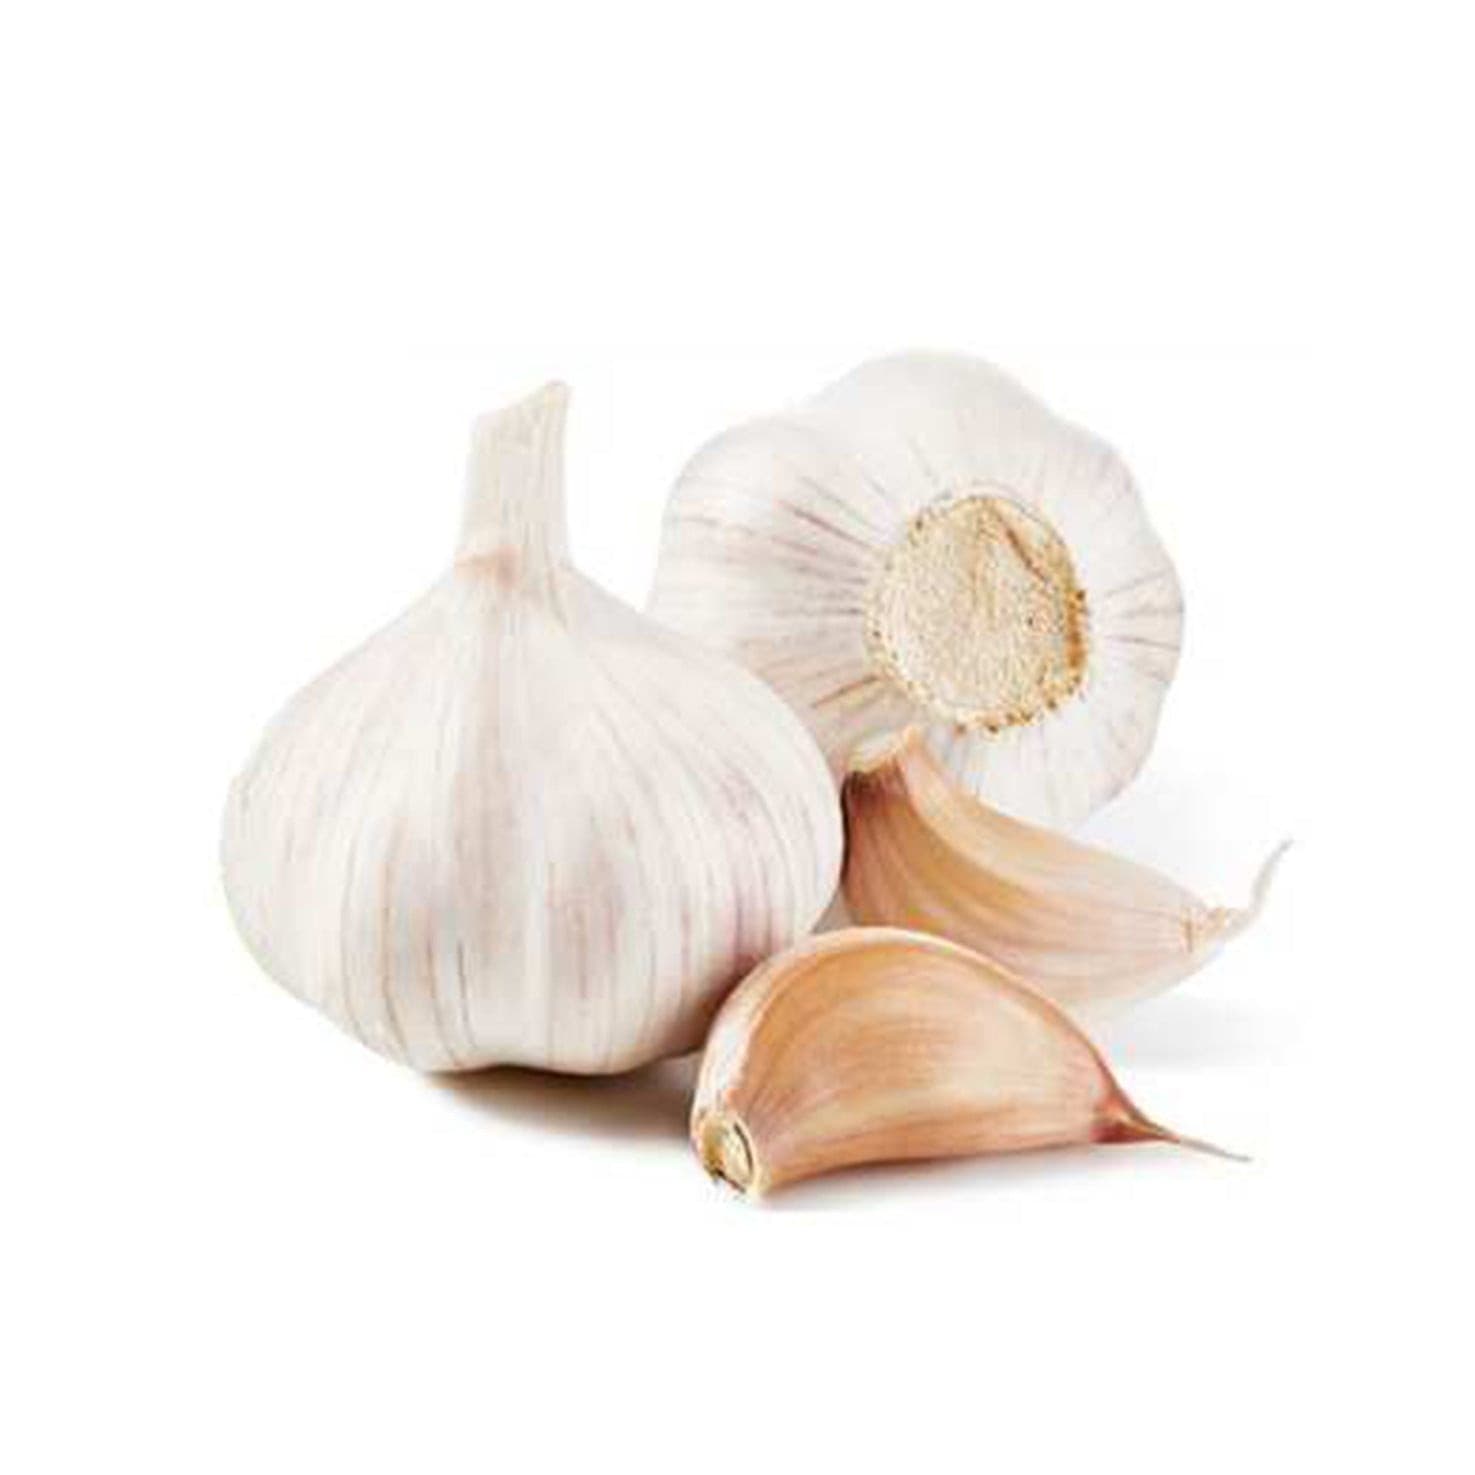 Garlic (7036976562363)